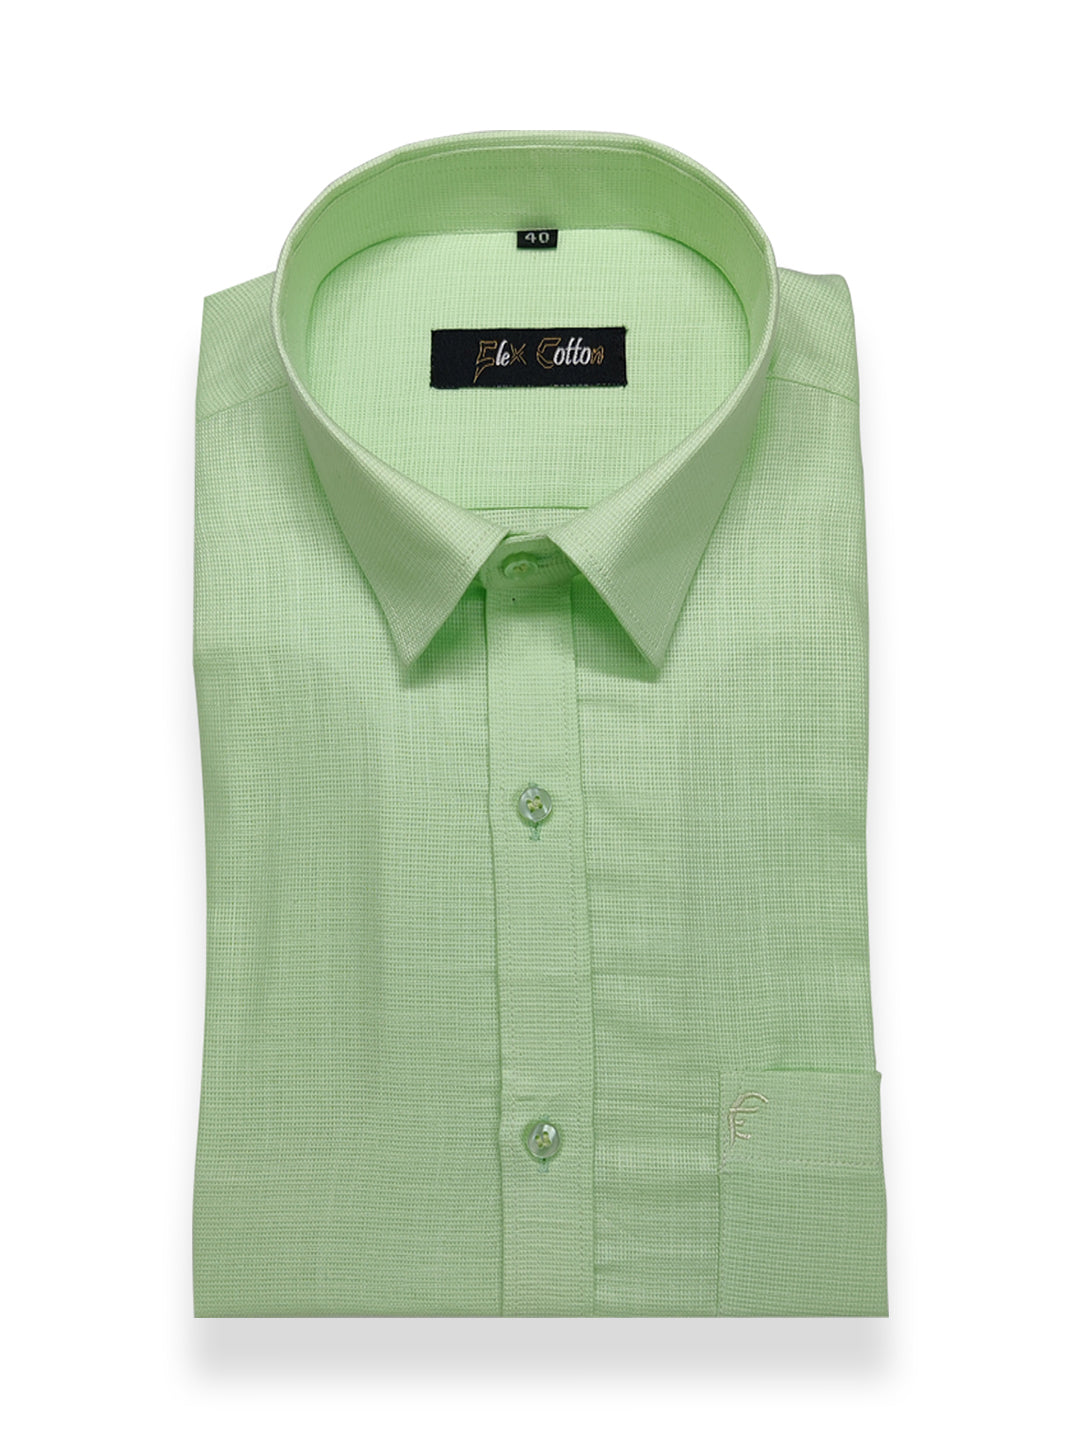 Plain Poly Cotton KingS Man Shirts  Bottle Green Full Sleeves Formal  Wear